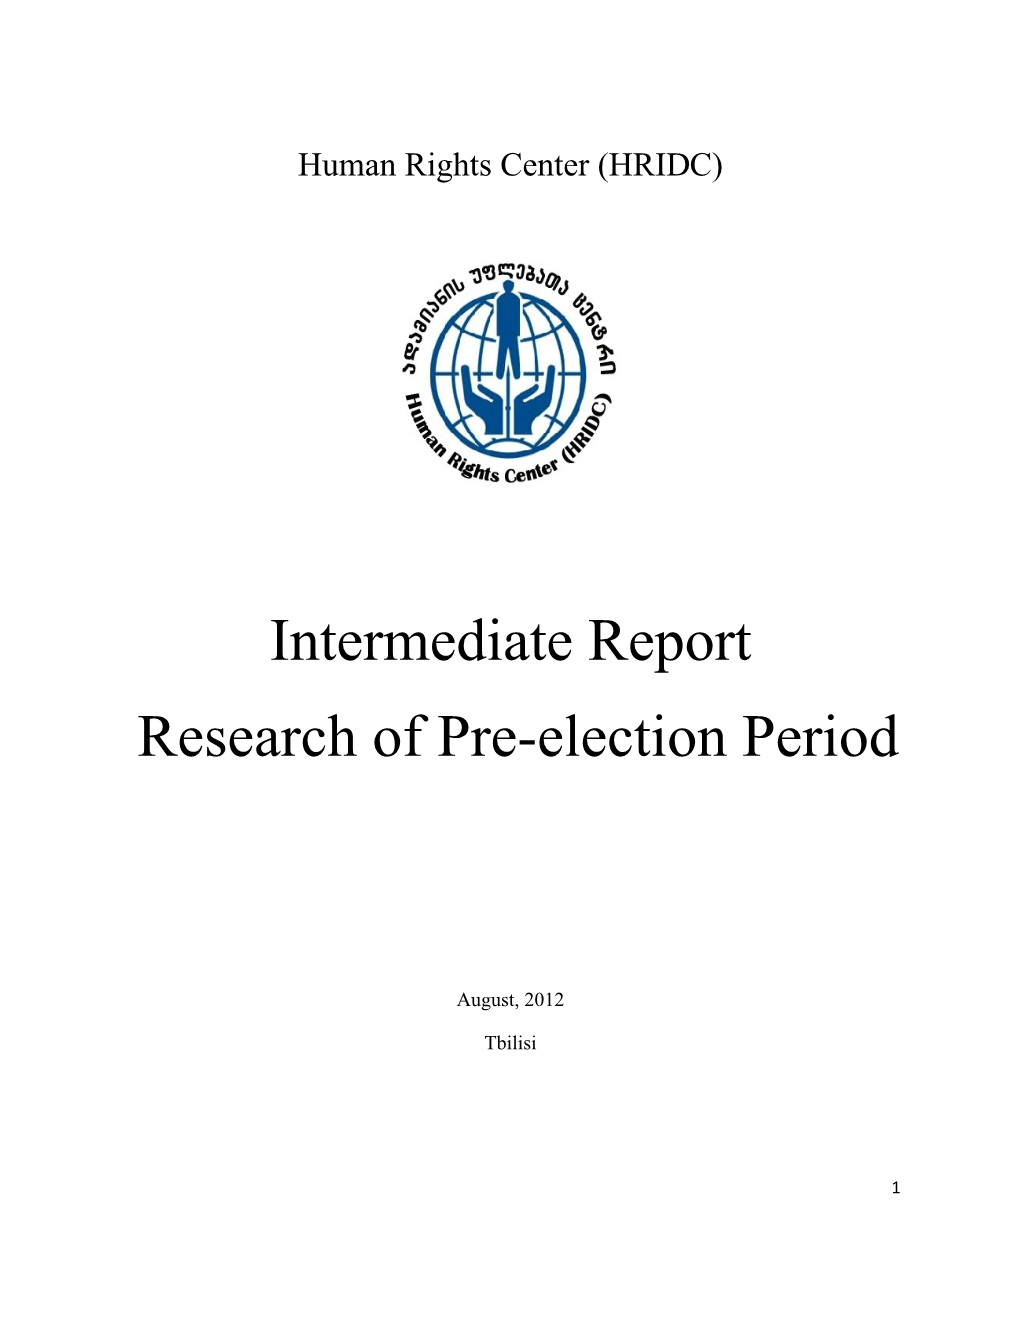 Intermediate Report Research of Pre-Election Period